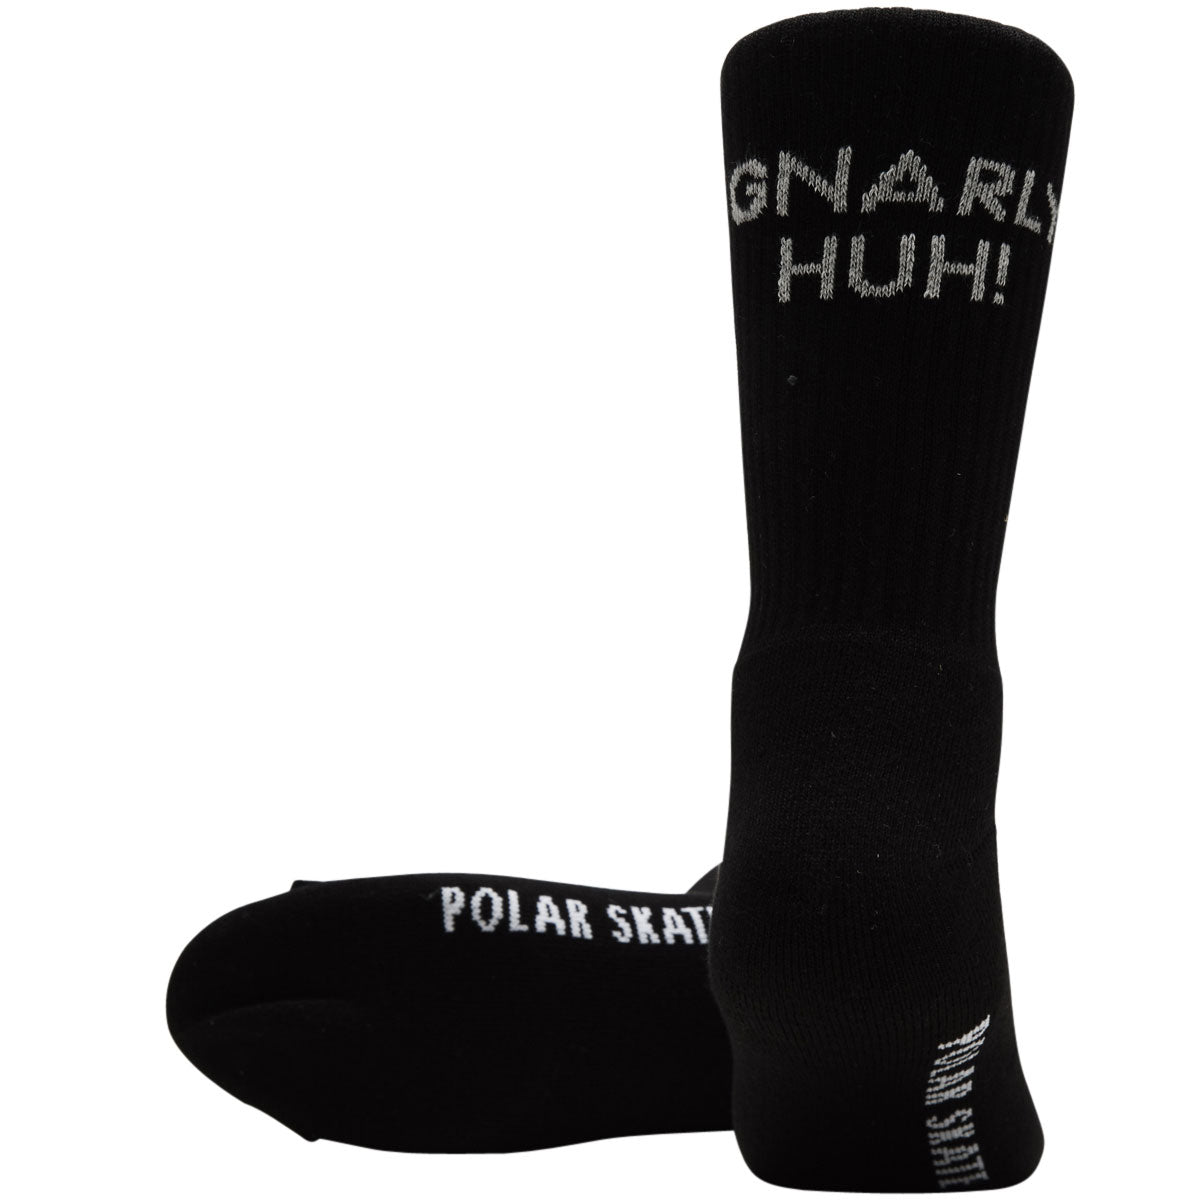 Polar Rib Gnarly Huh! Socks - Black image 2